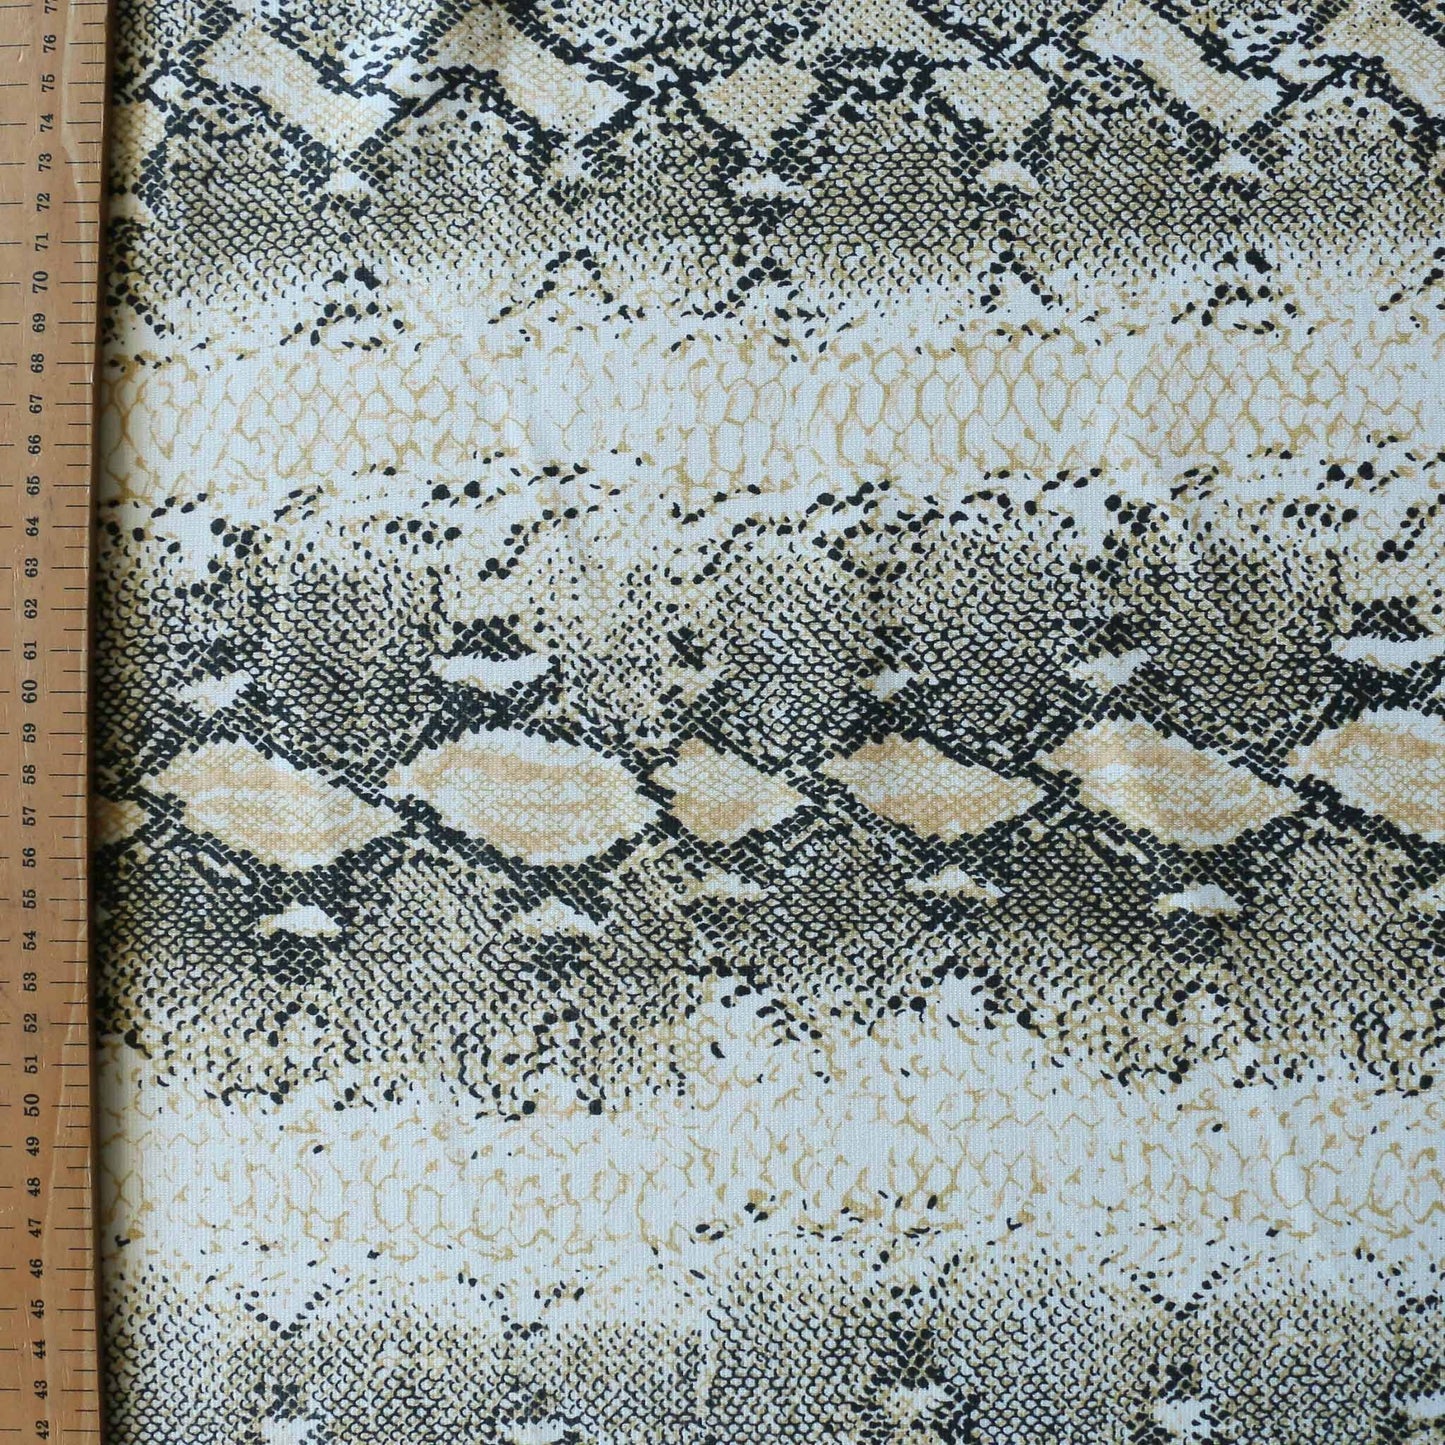 metre snake skin printed ponte roma dressmaking fabric in gold and black